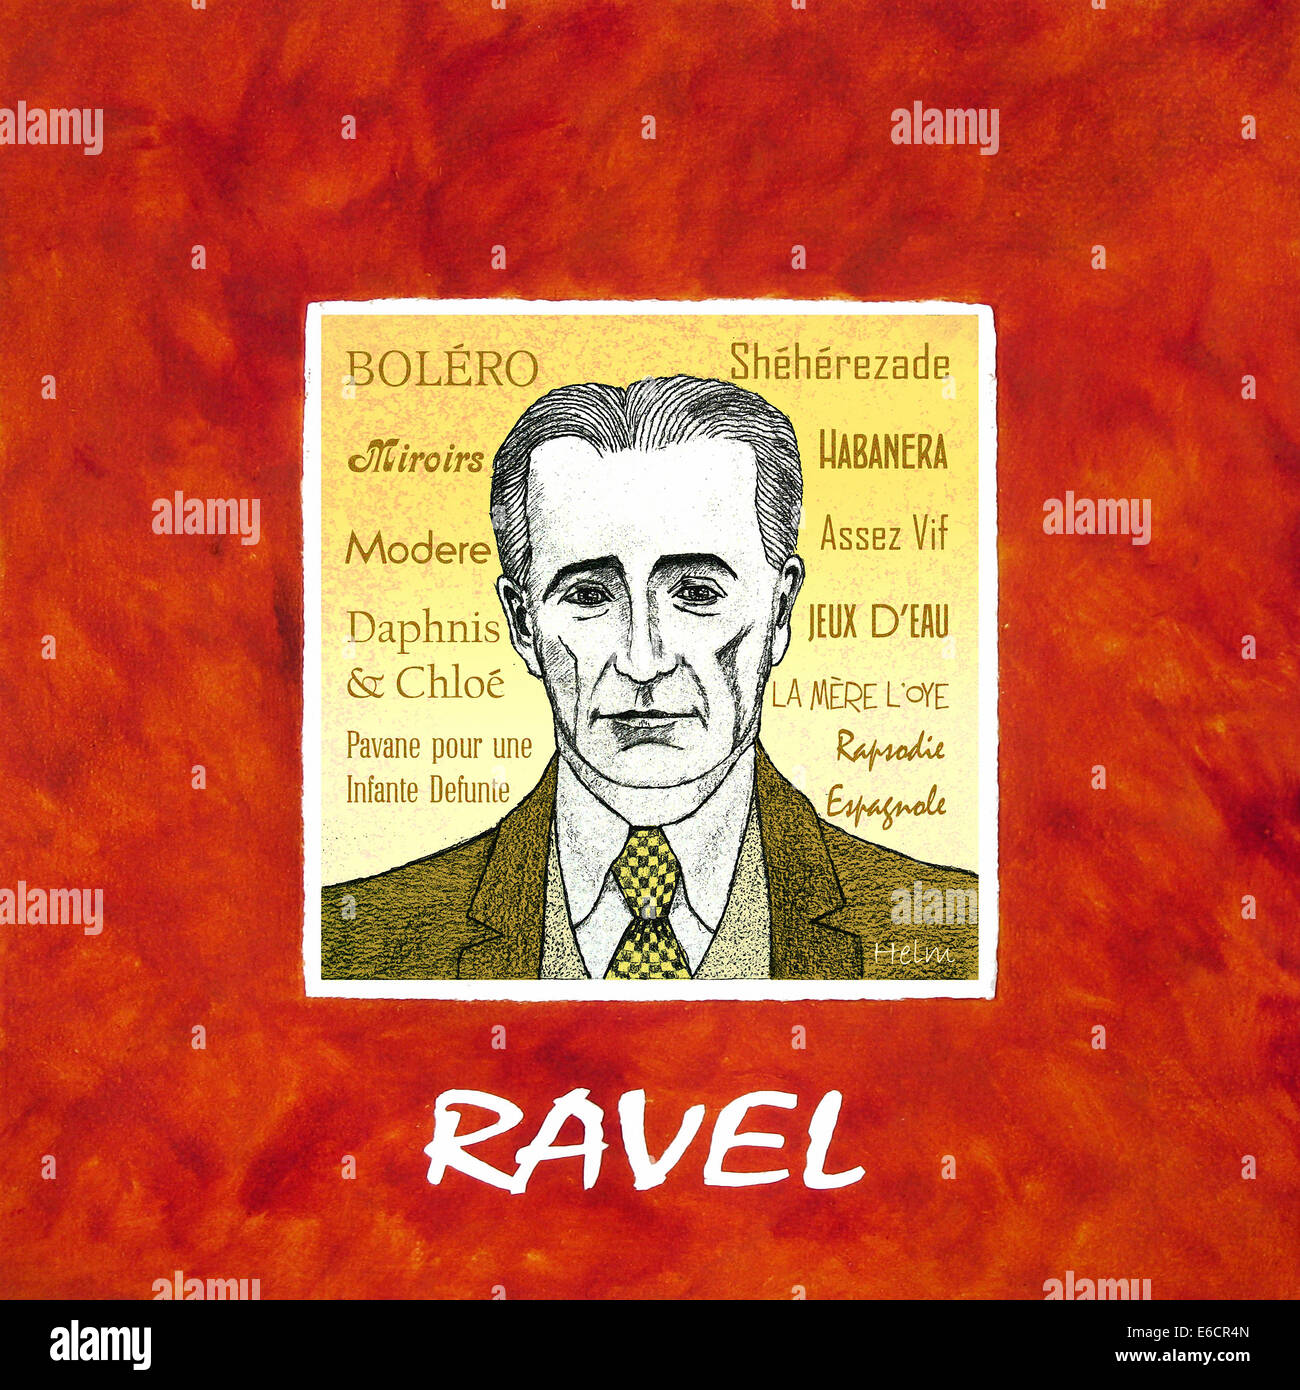 Ravel, French composer, portrait 1875 - 1937 Stock Photo